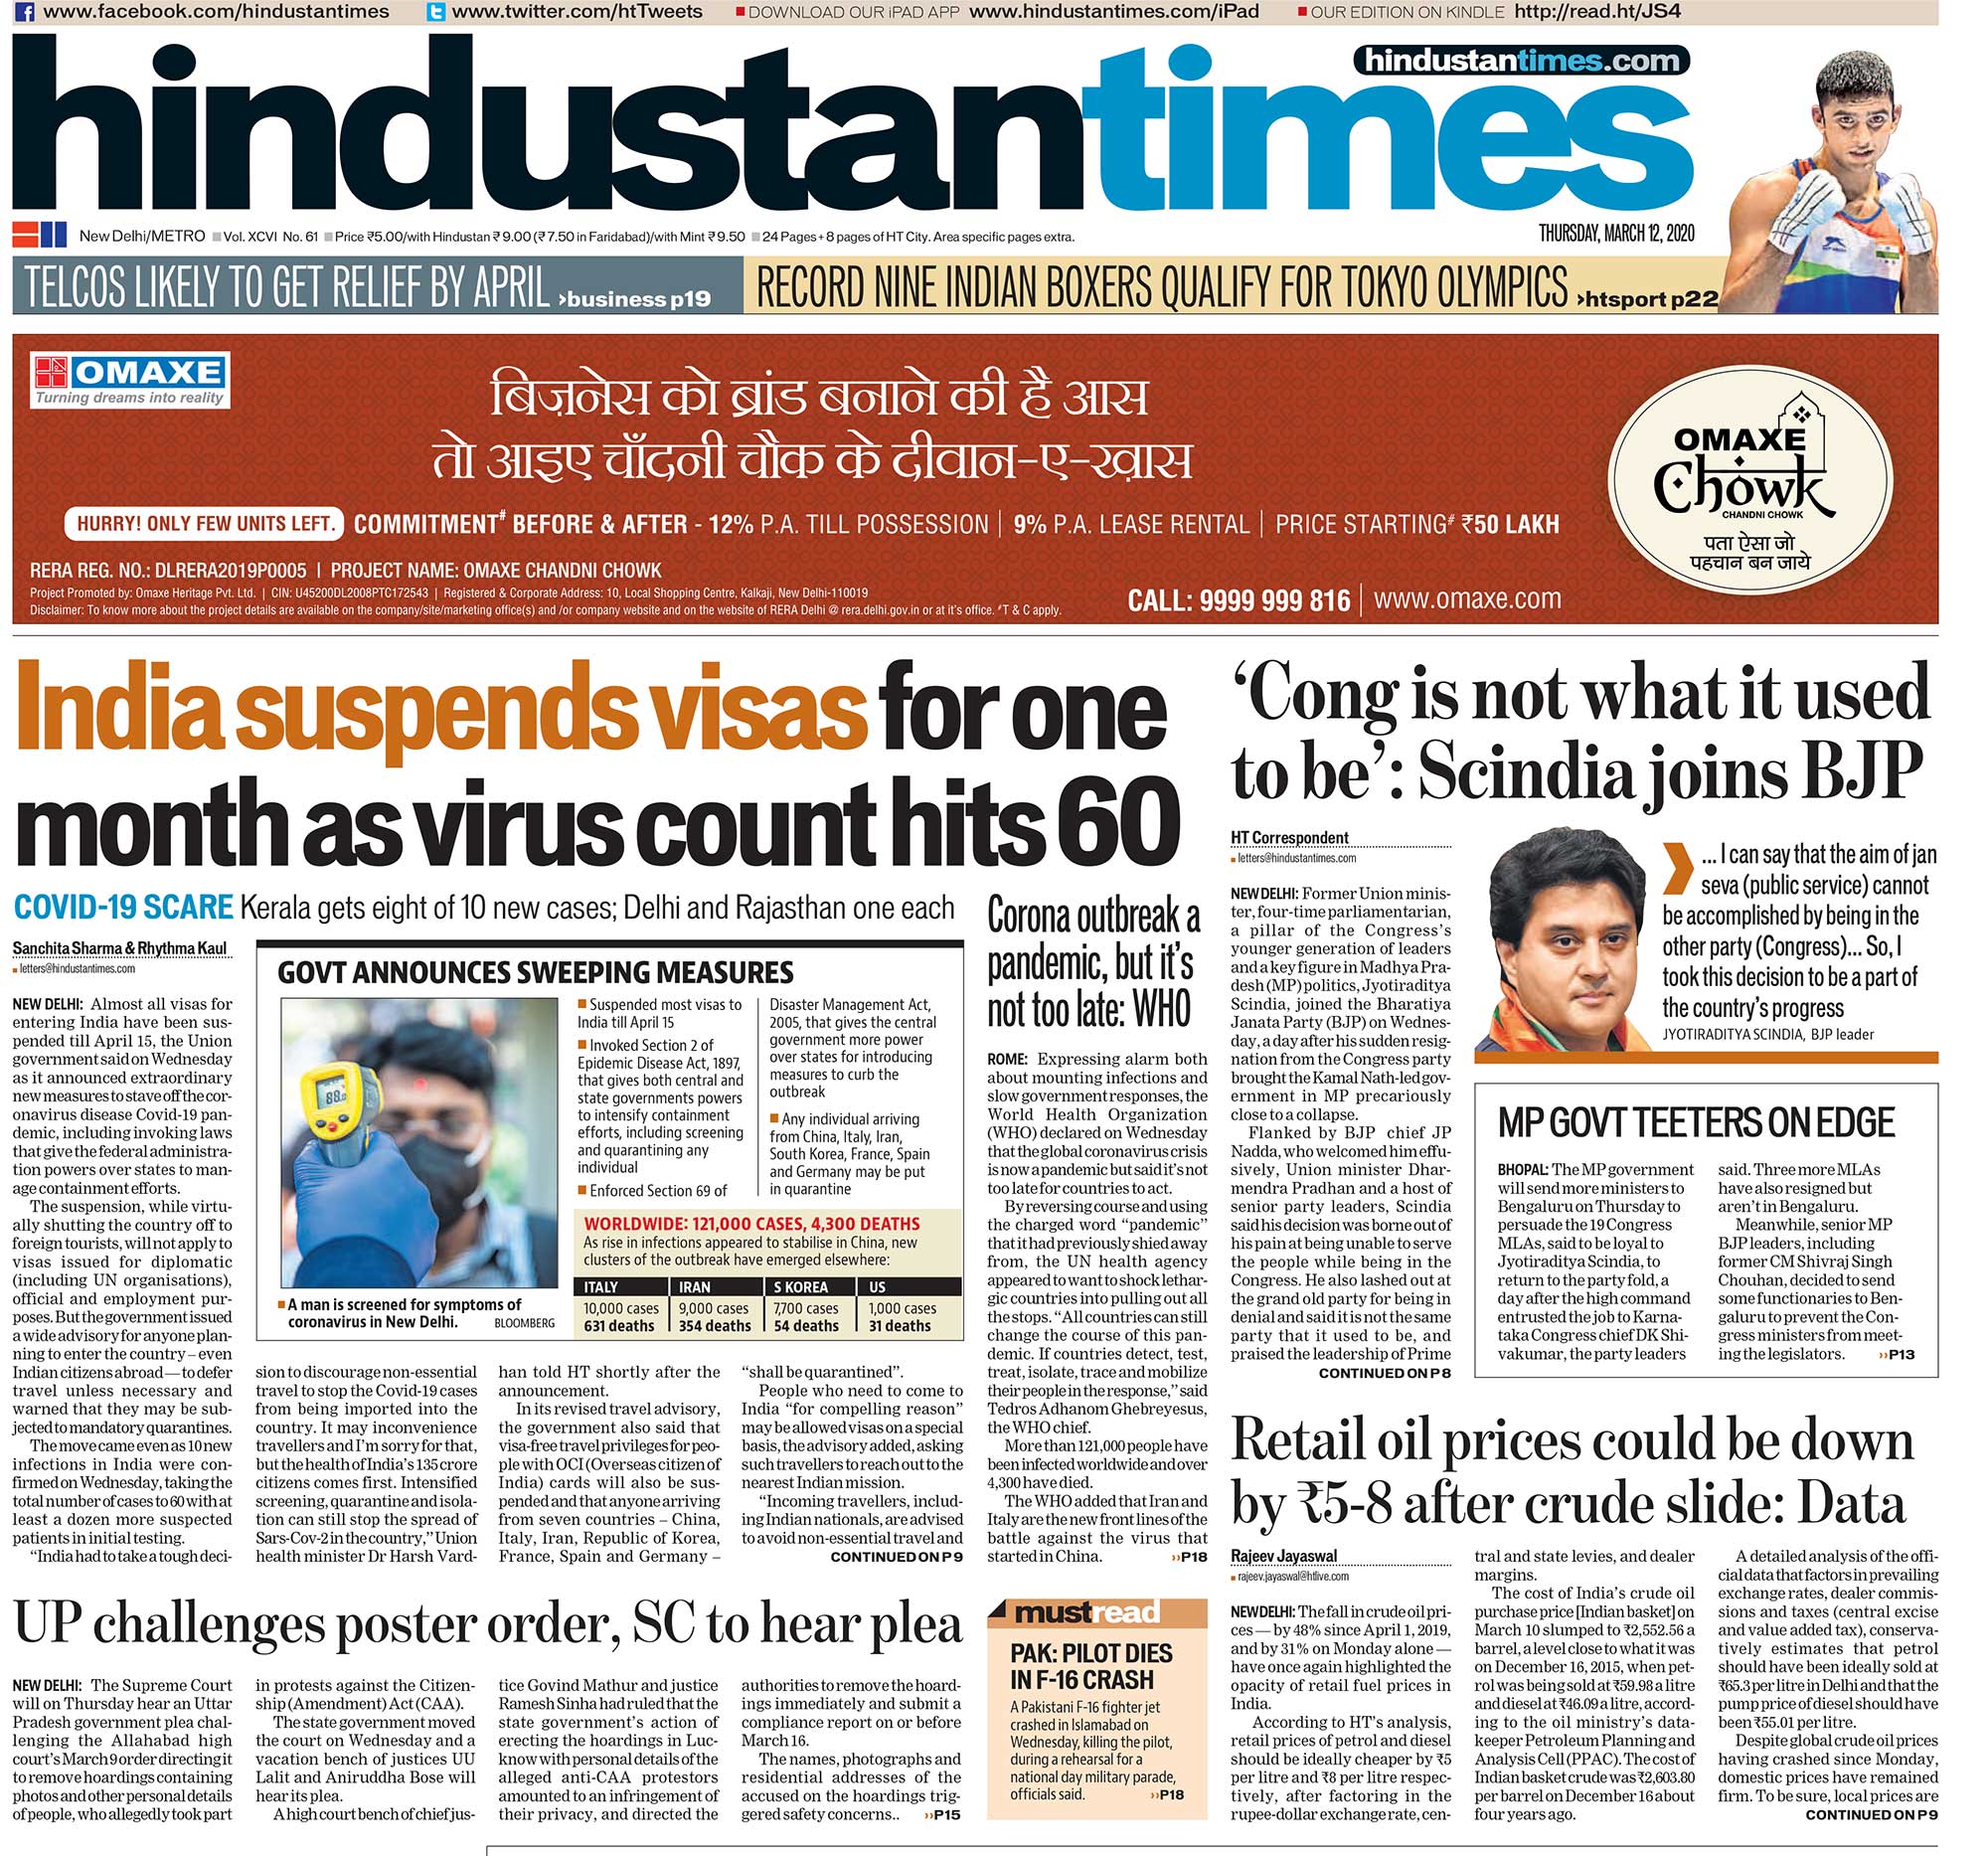 Newspaper Headlines India Suspends Visas Till April 15 Amid Coronavirus Scare Other Top Stories